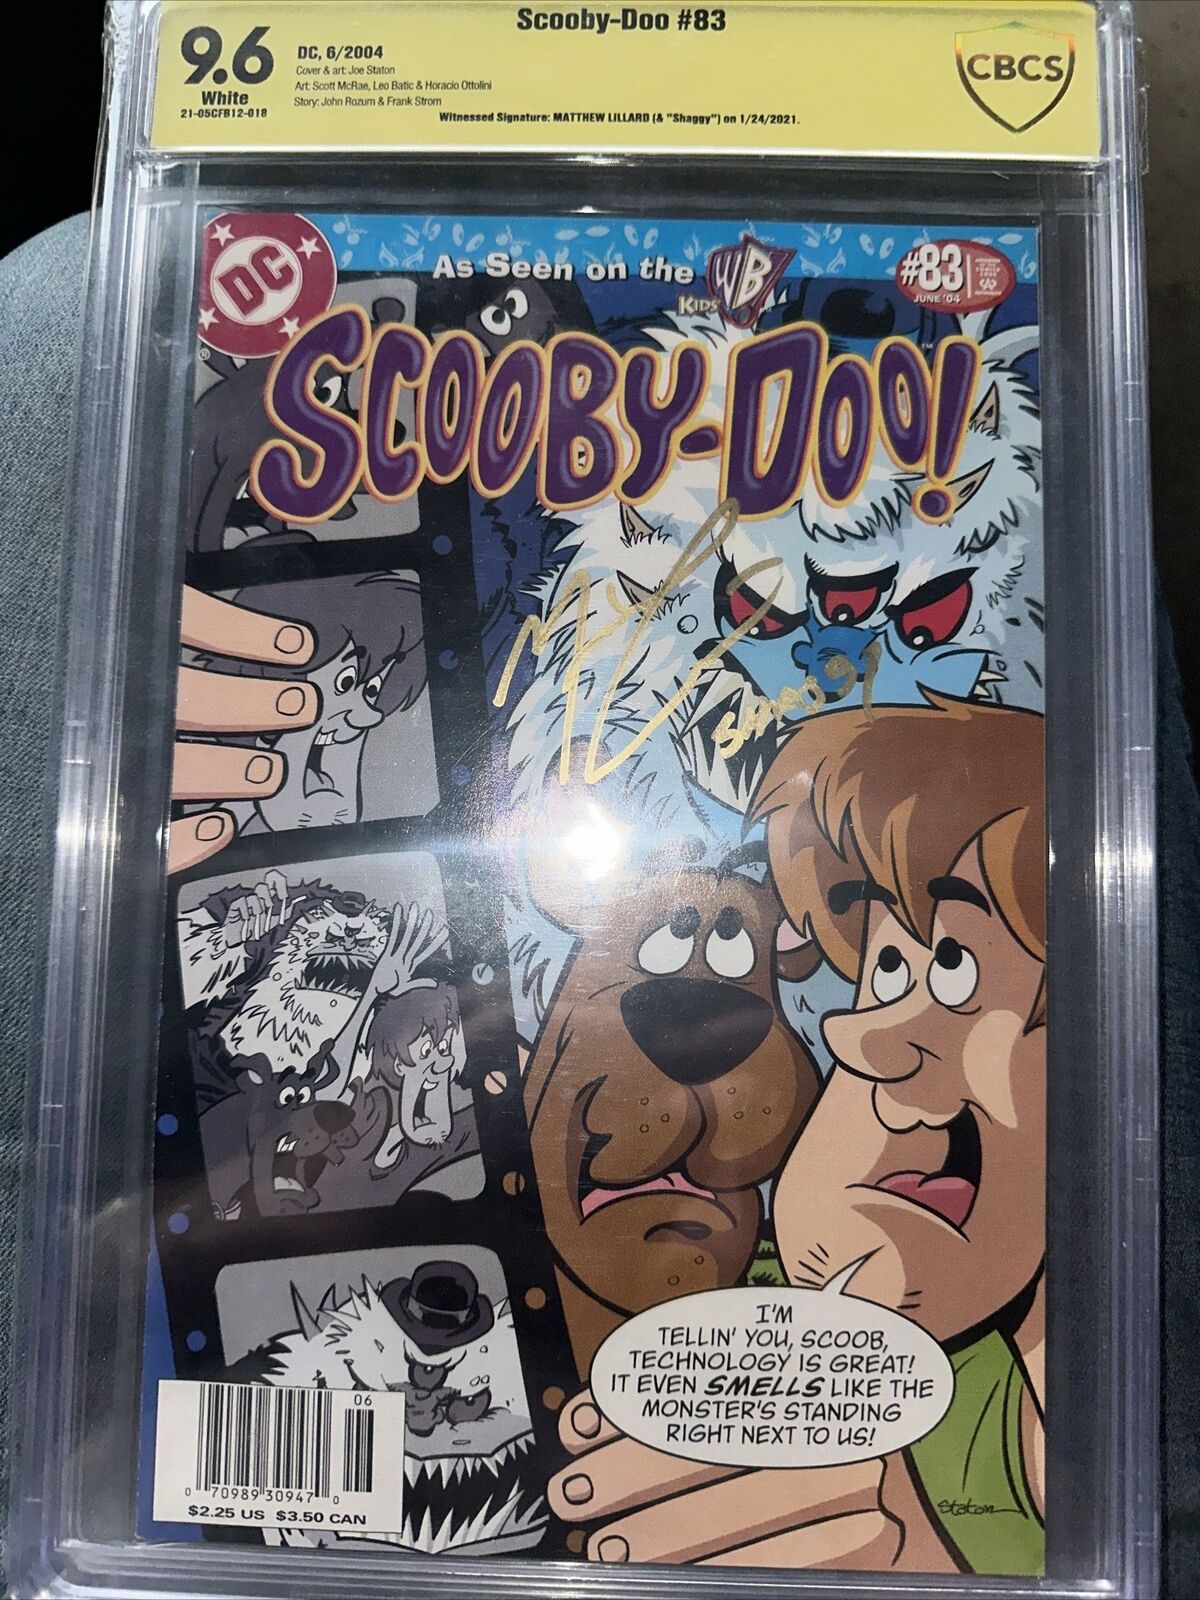 2004 Scooby Doo Comic #83 Signed By Actor Mathew Lillard  “Shaggy” Cgc 9.6